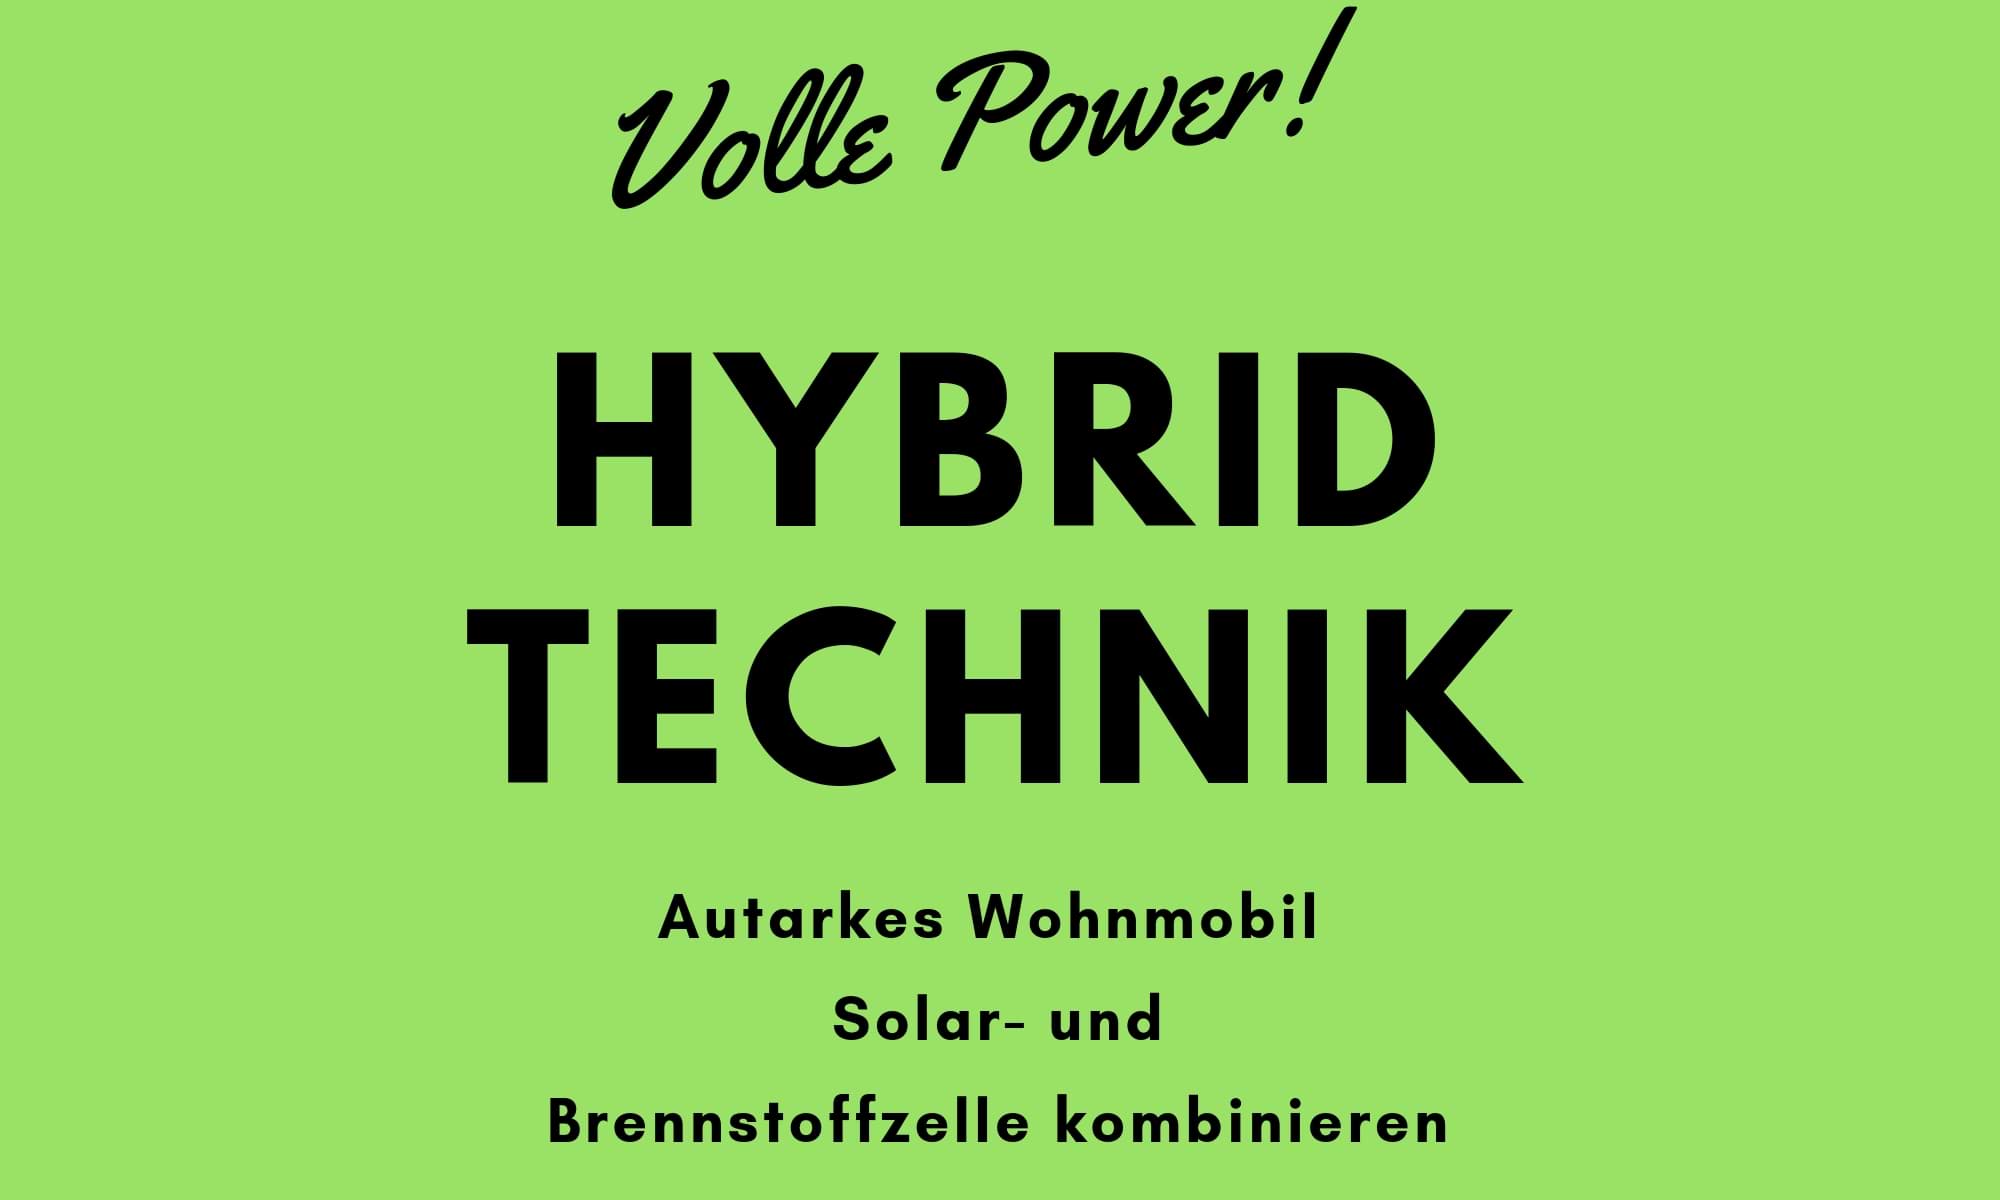 Hybrid Technik – Solar mit Brennstoffzelle ergänzen